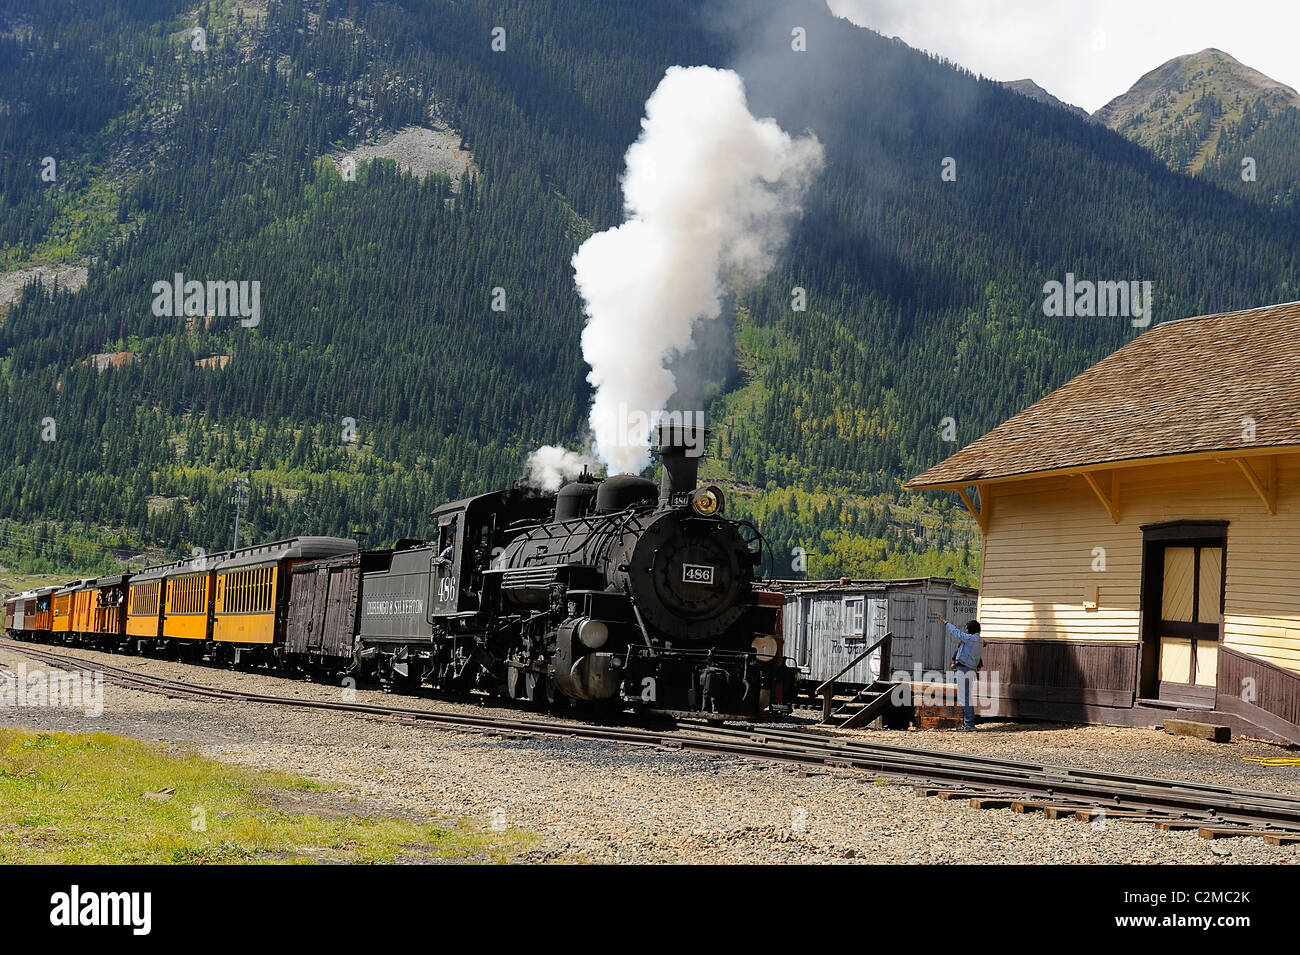 A steam engine, locomotive on the railroad Silverton station, Colorado, USA. Stock Photo